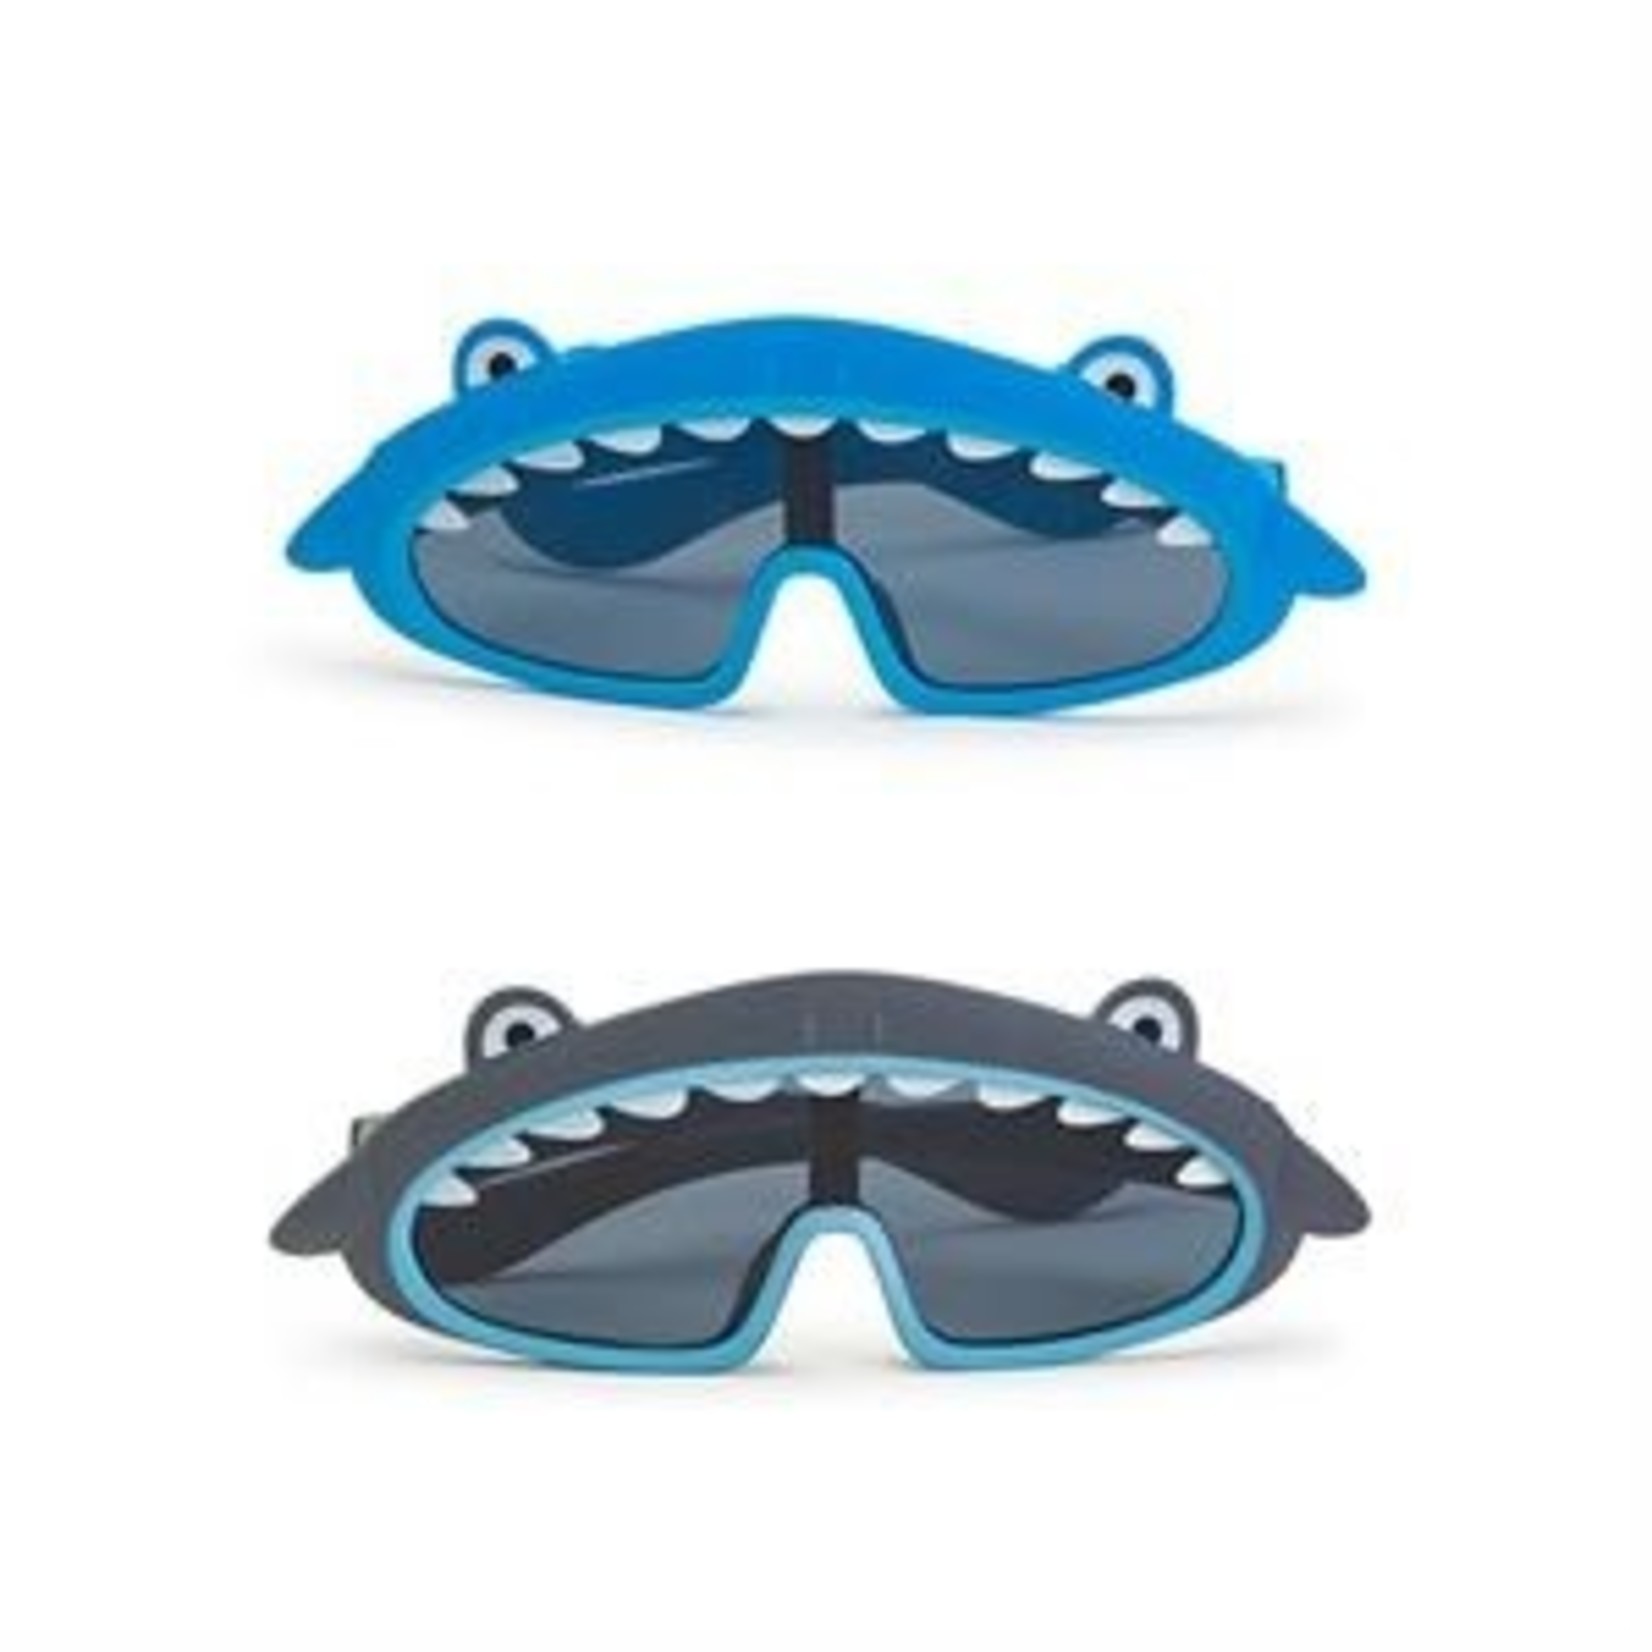 Two's Company Shark Sunglasses